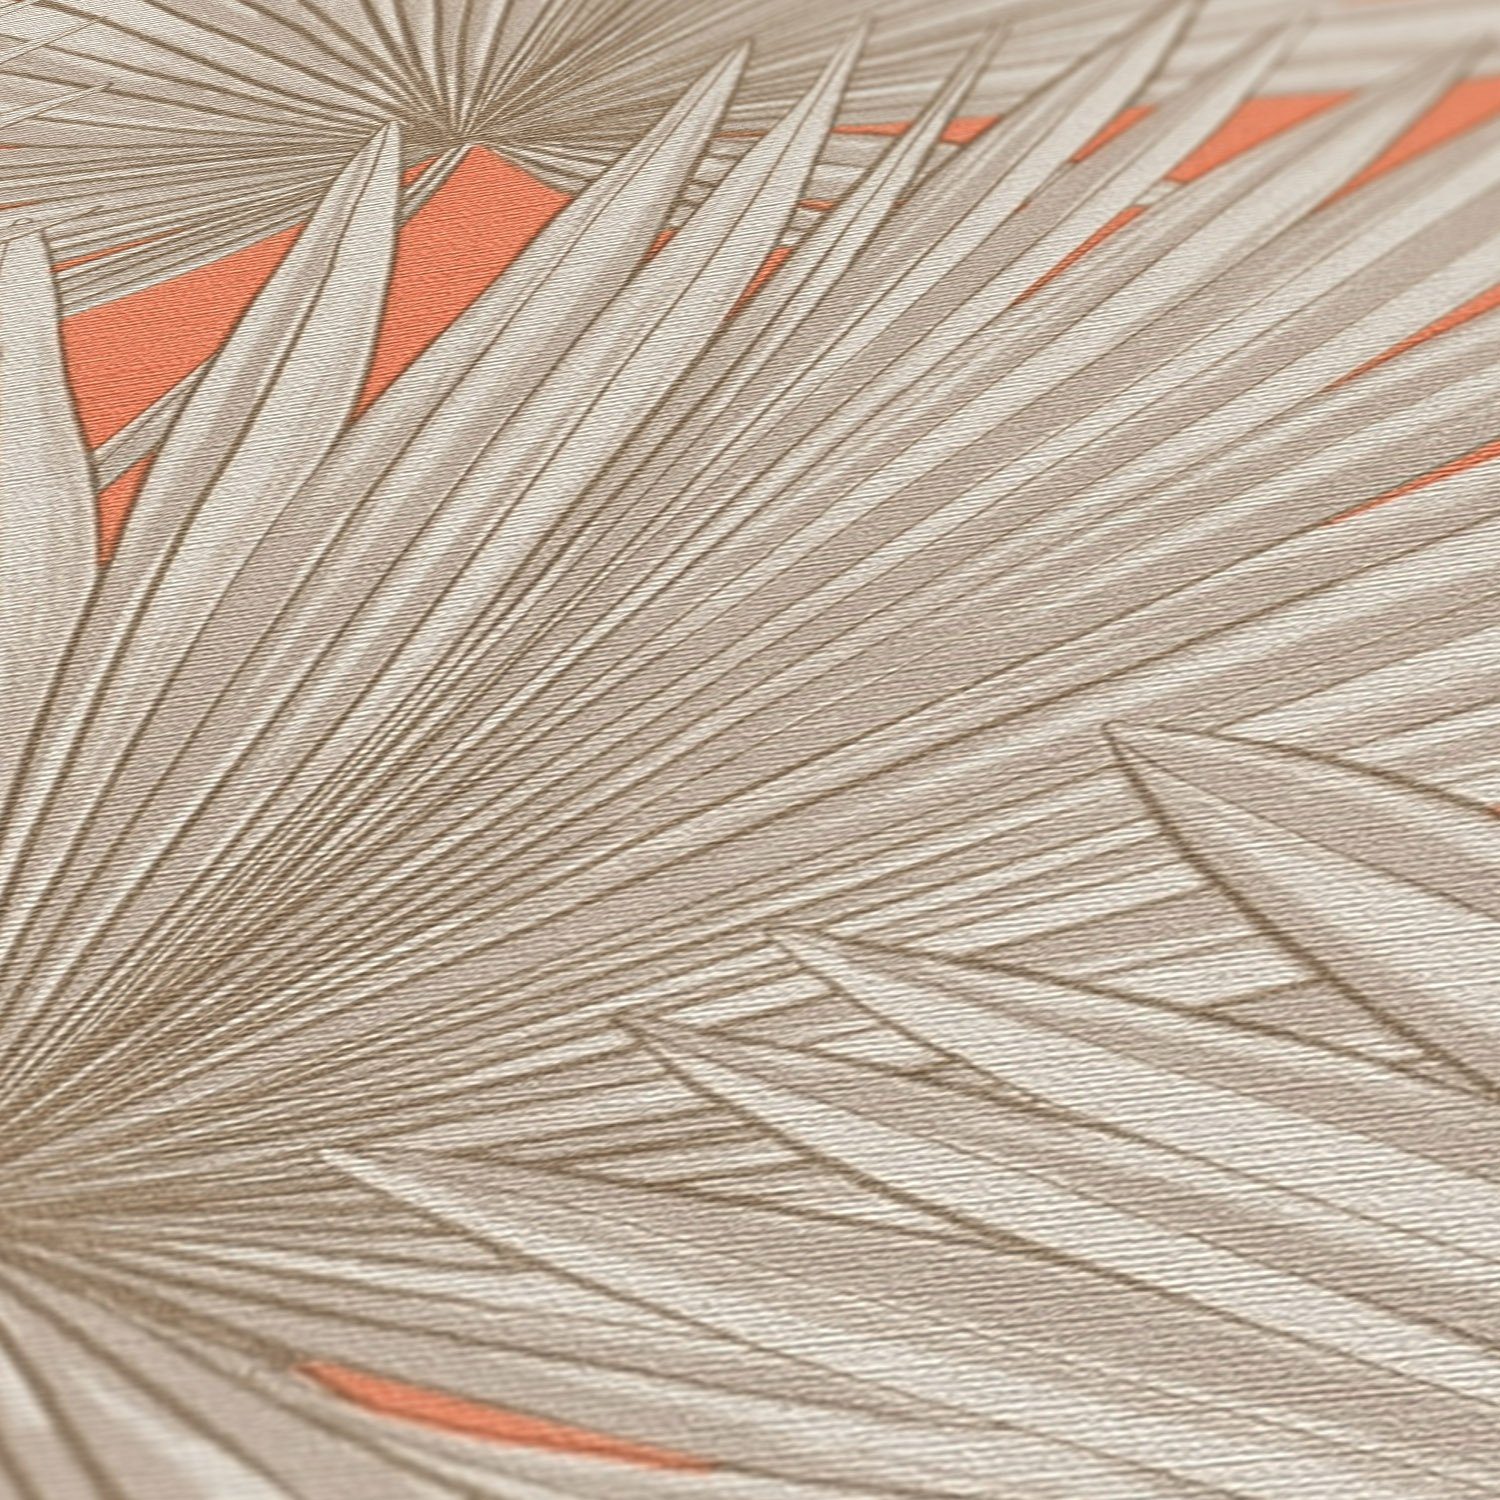 Antigua St), A.S. Floral Tapete matt, Tapete mit Palmenblätter, (1 geprägt, Vliestapete Création beige,natur,orange